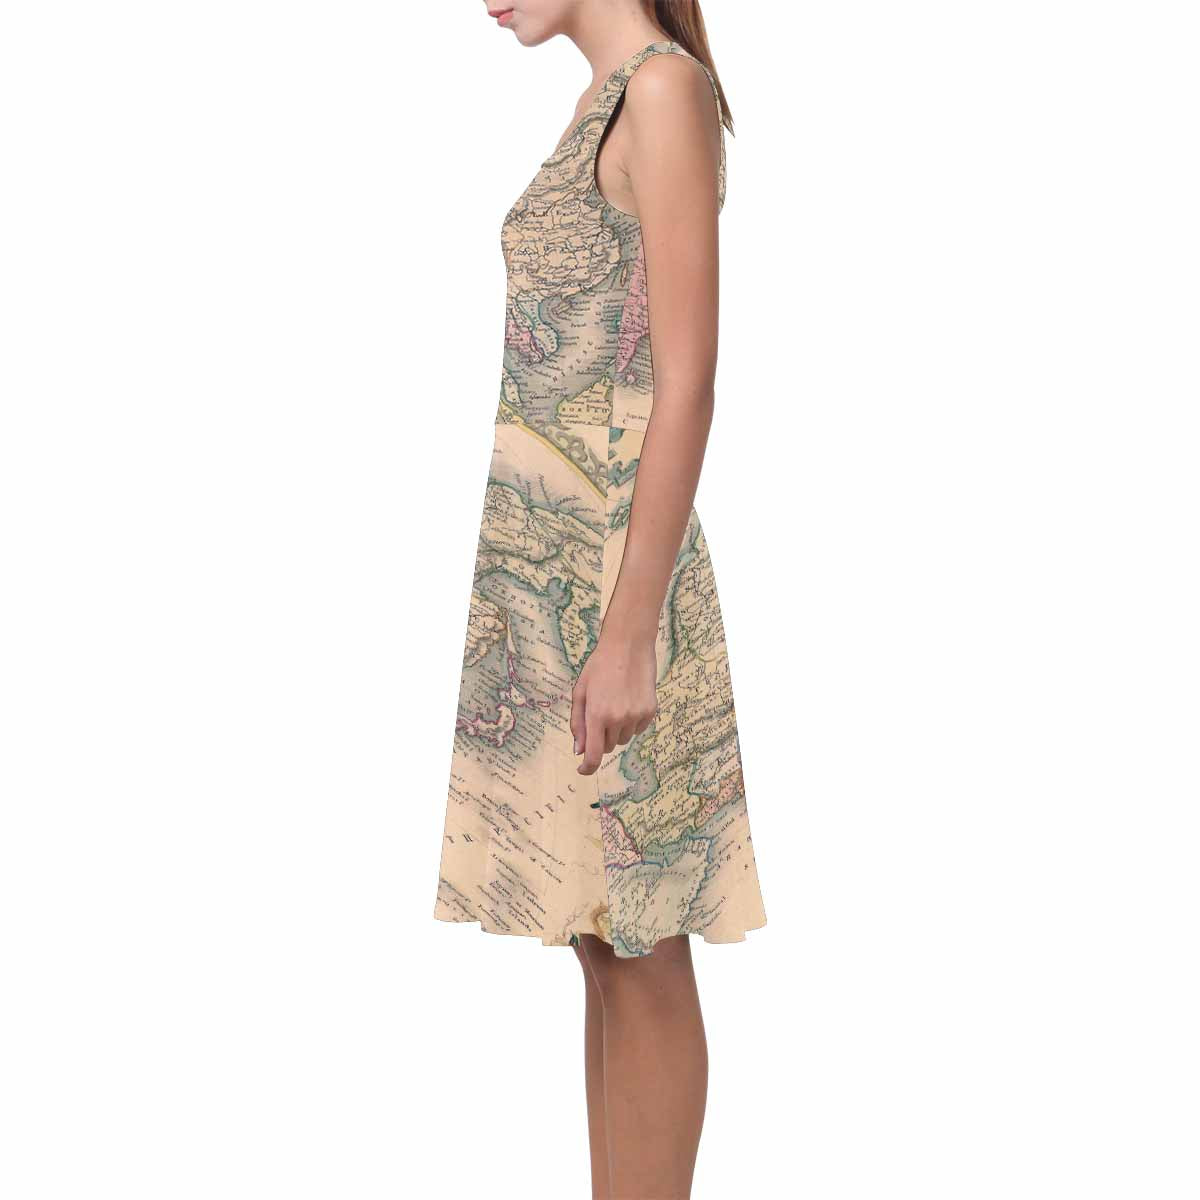 Antique Map casual summer dress, MODEL 09534, design 31